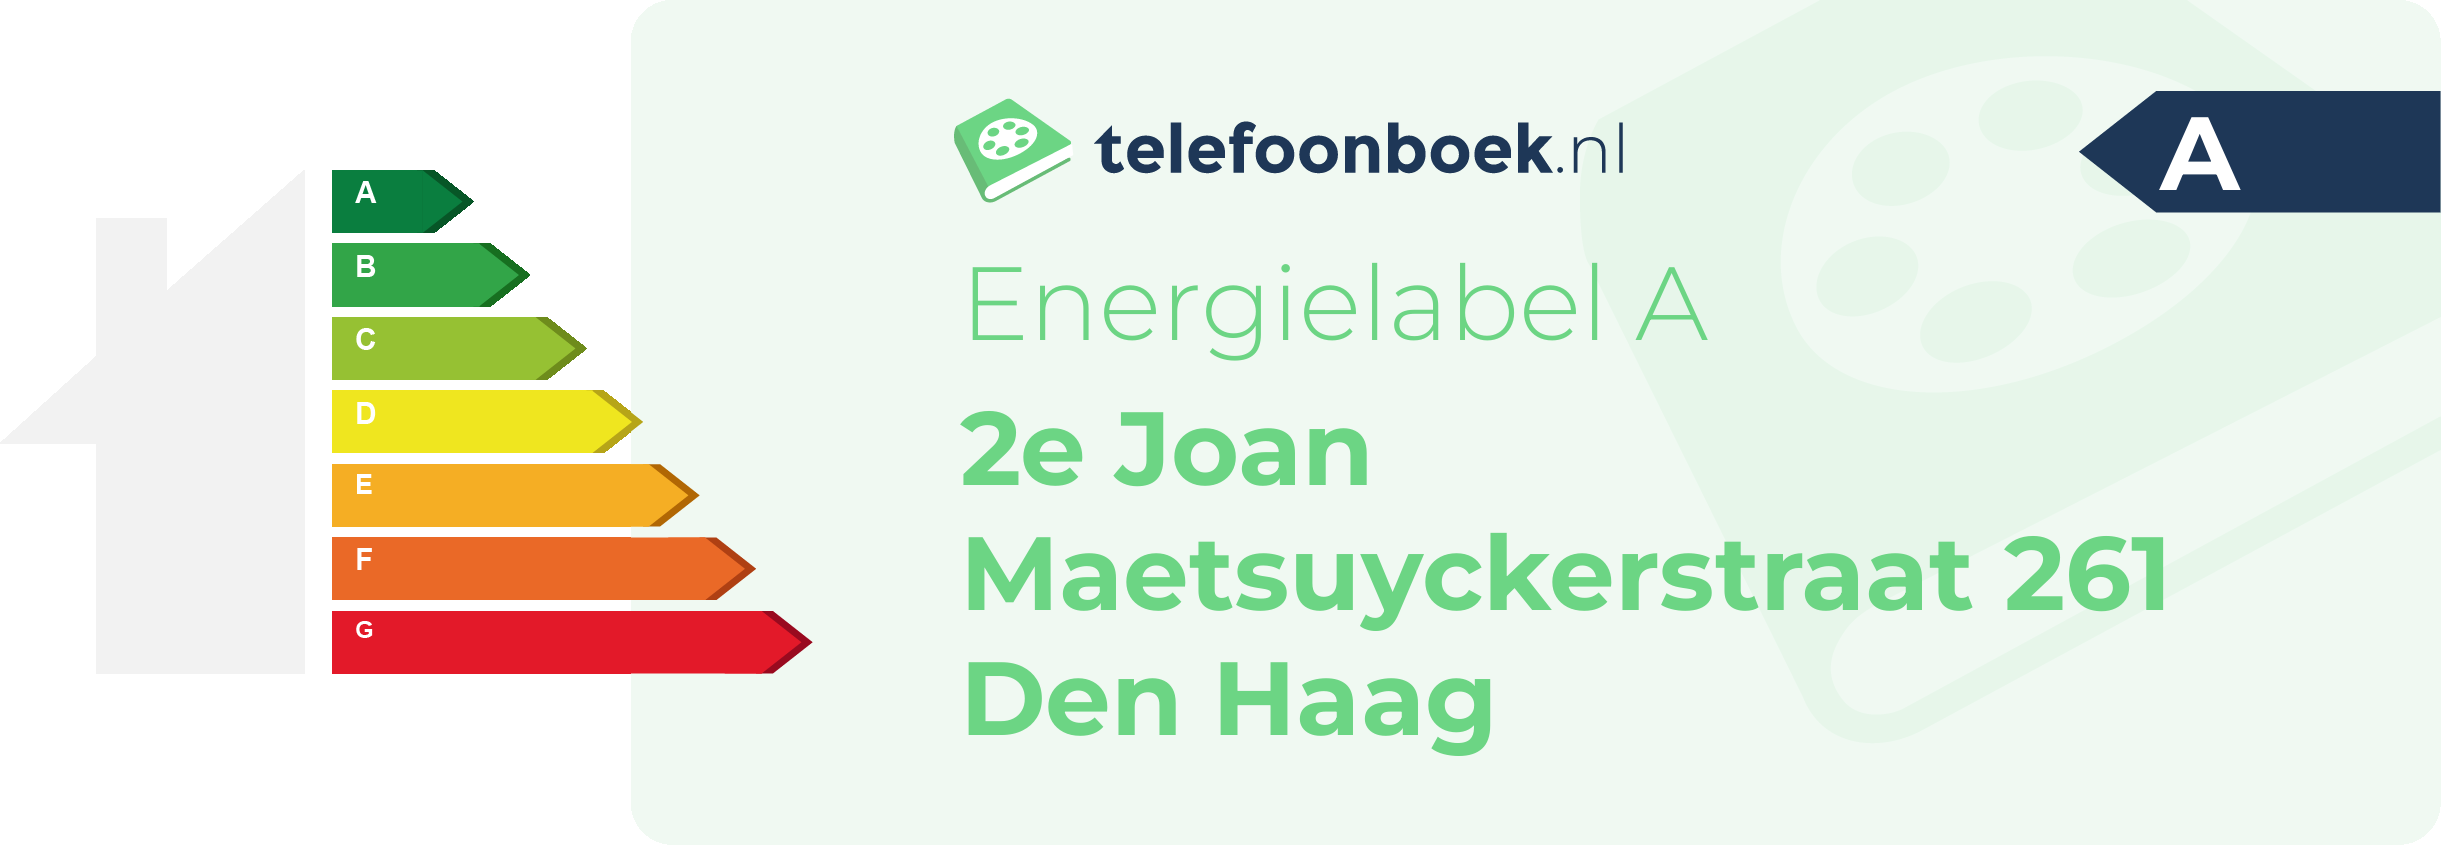 Energielabel 2e Joan Maetsuyckerstraat 261 Den Haag